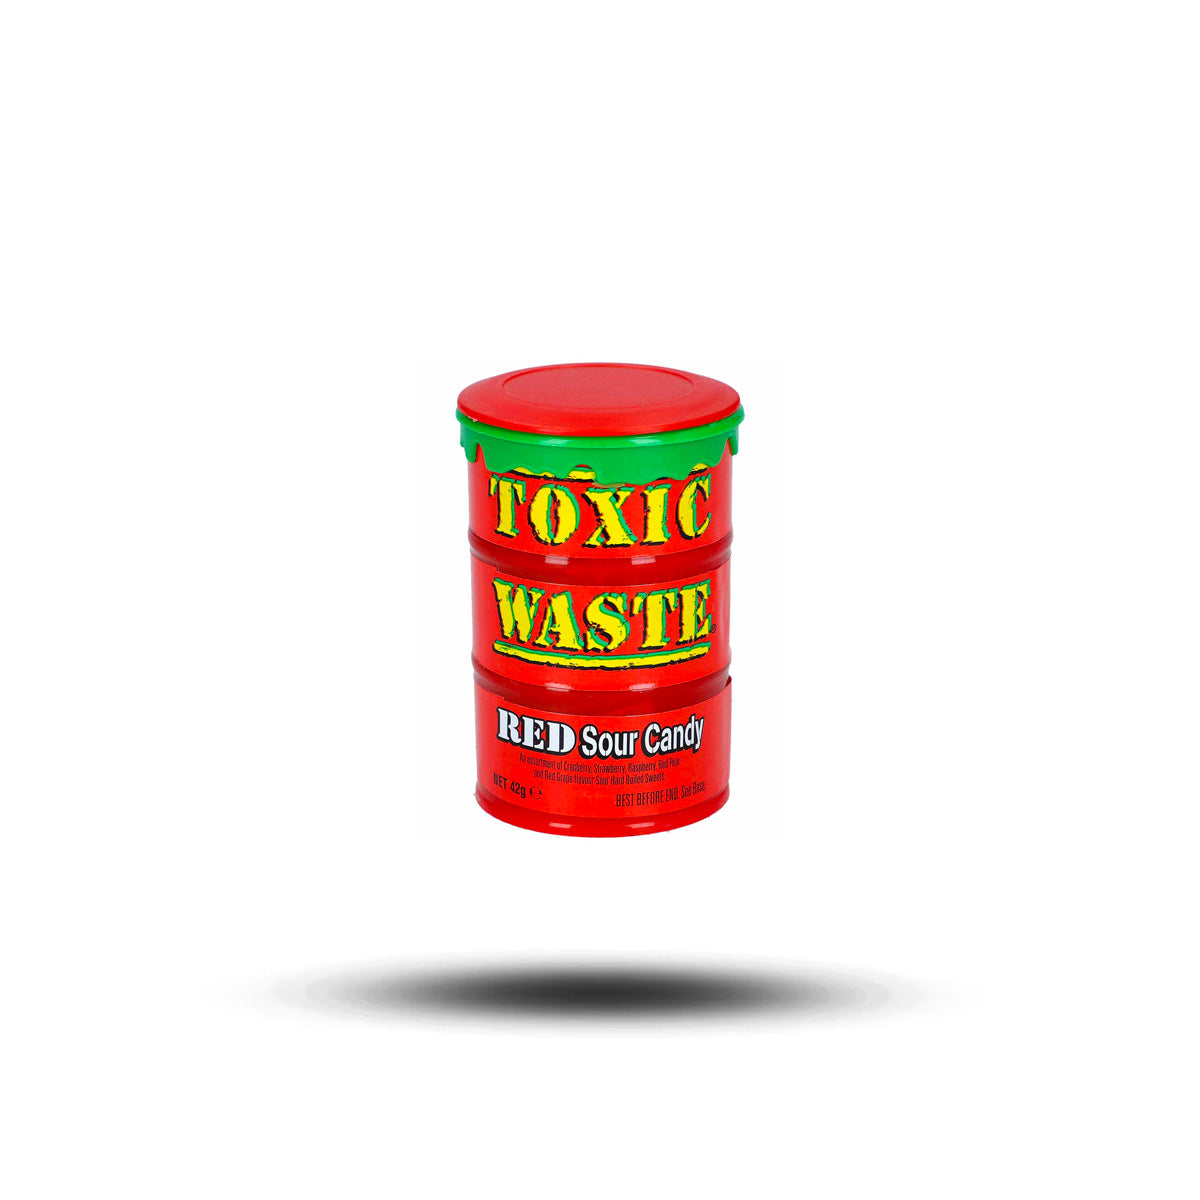 Toxic Waste Red Sour Candy 42g-SNACK SHOP AUSTRIA-SNACK SHOP AUSTRIA